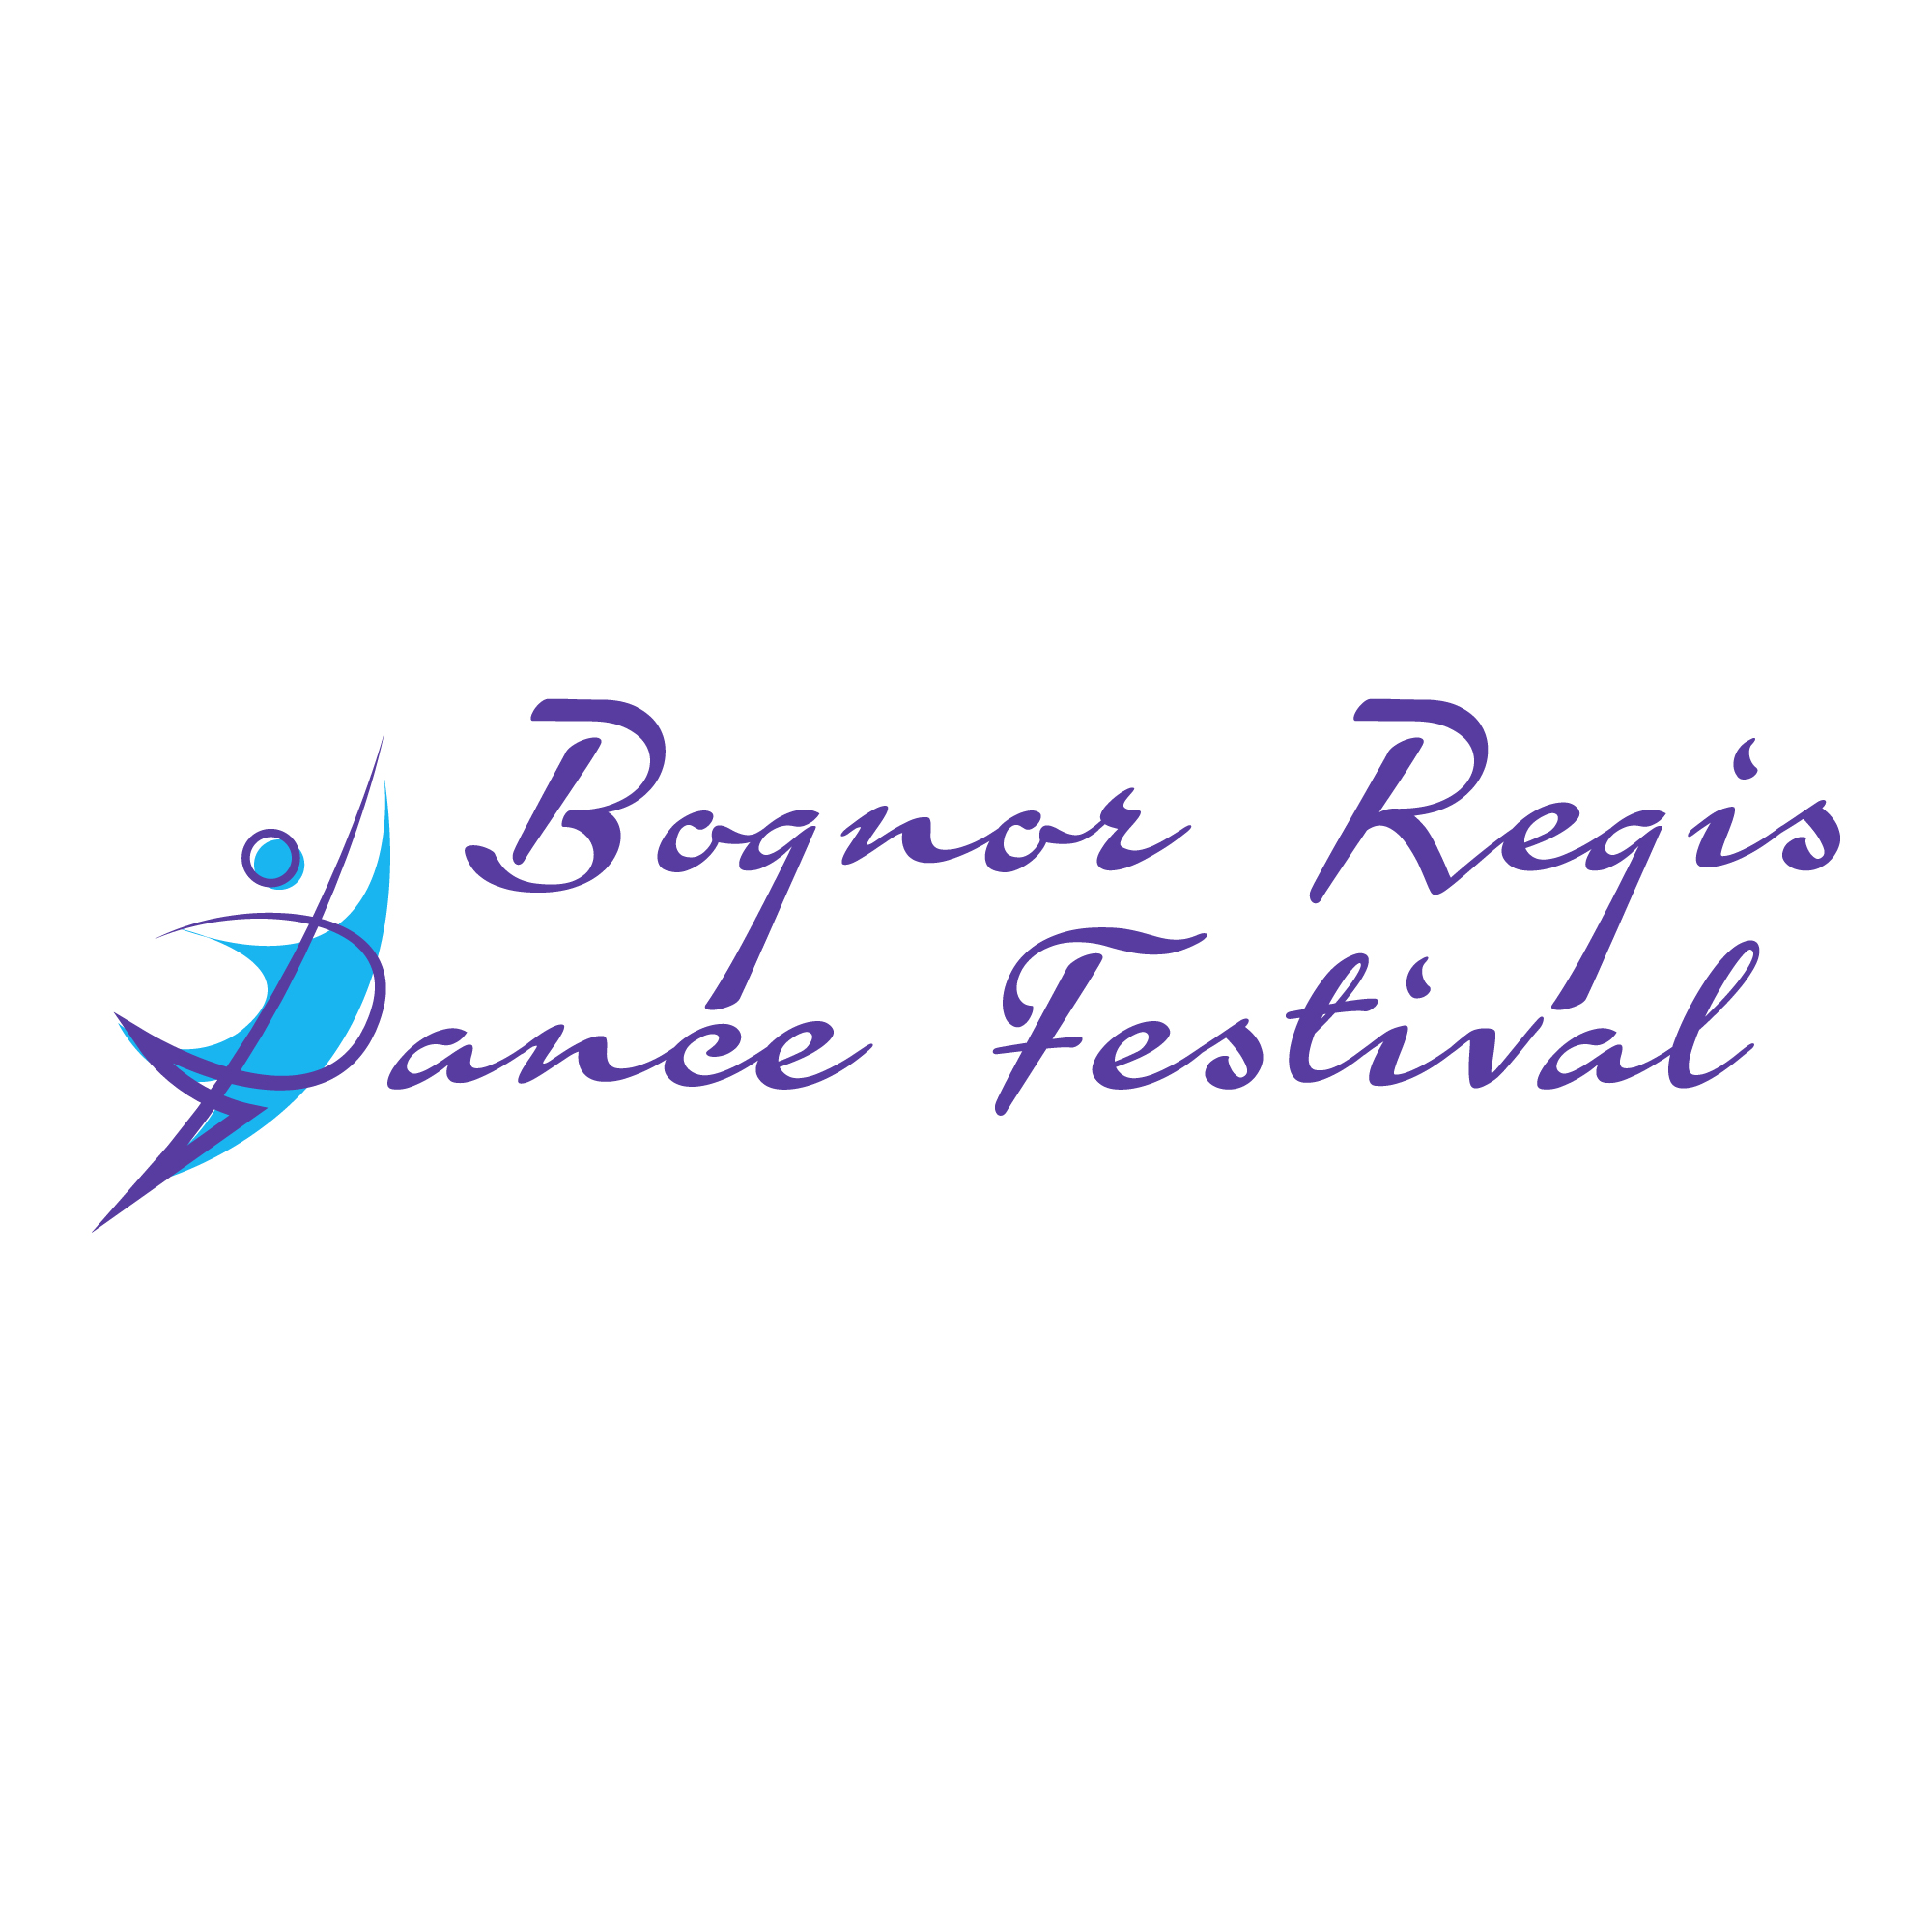 Bognor Regis Dance Festivals 2020